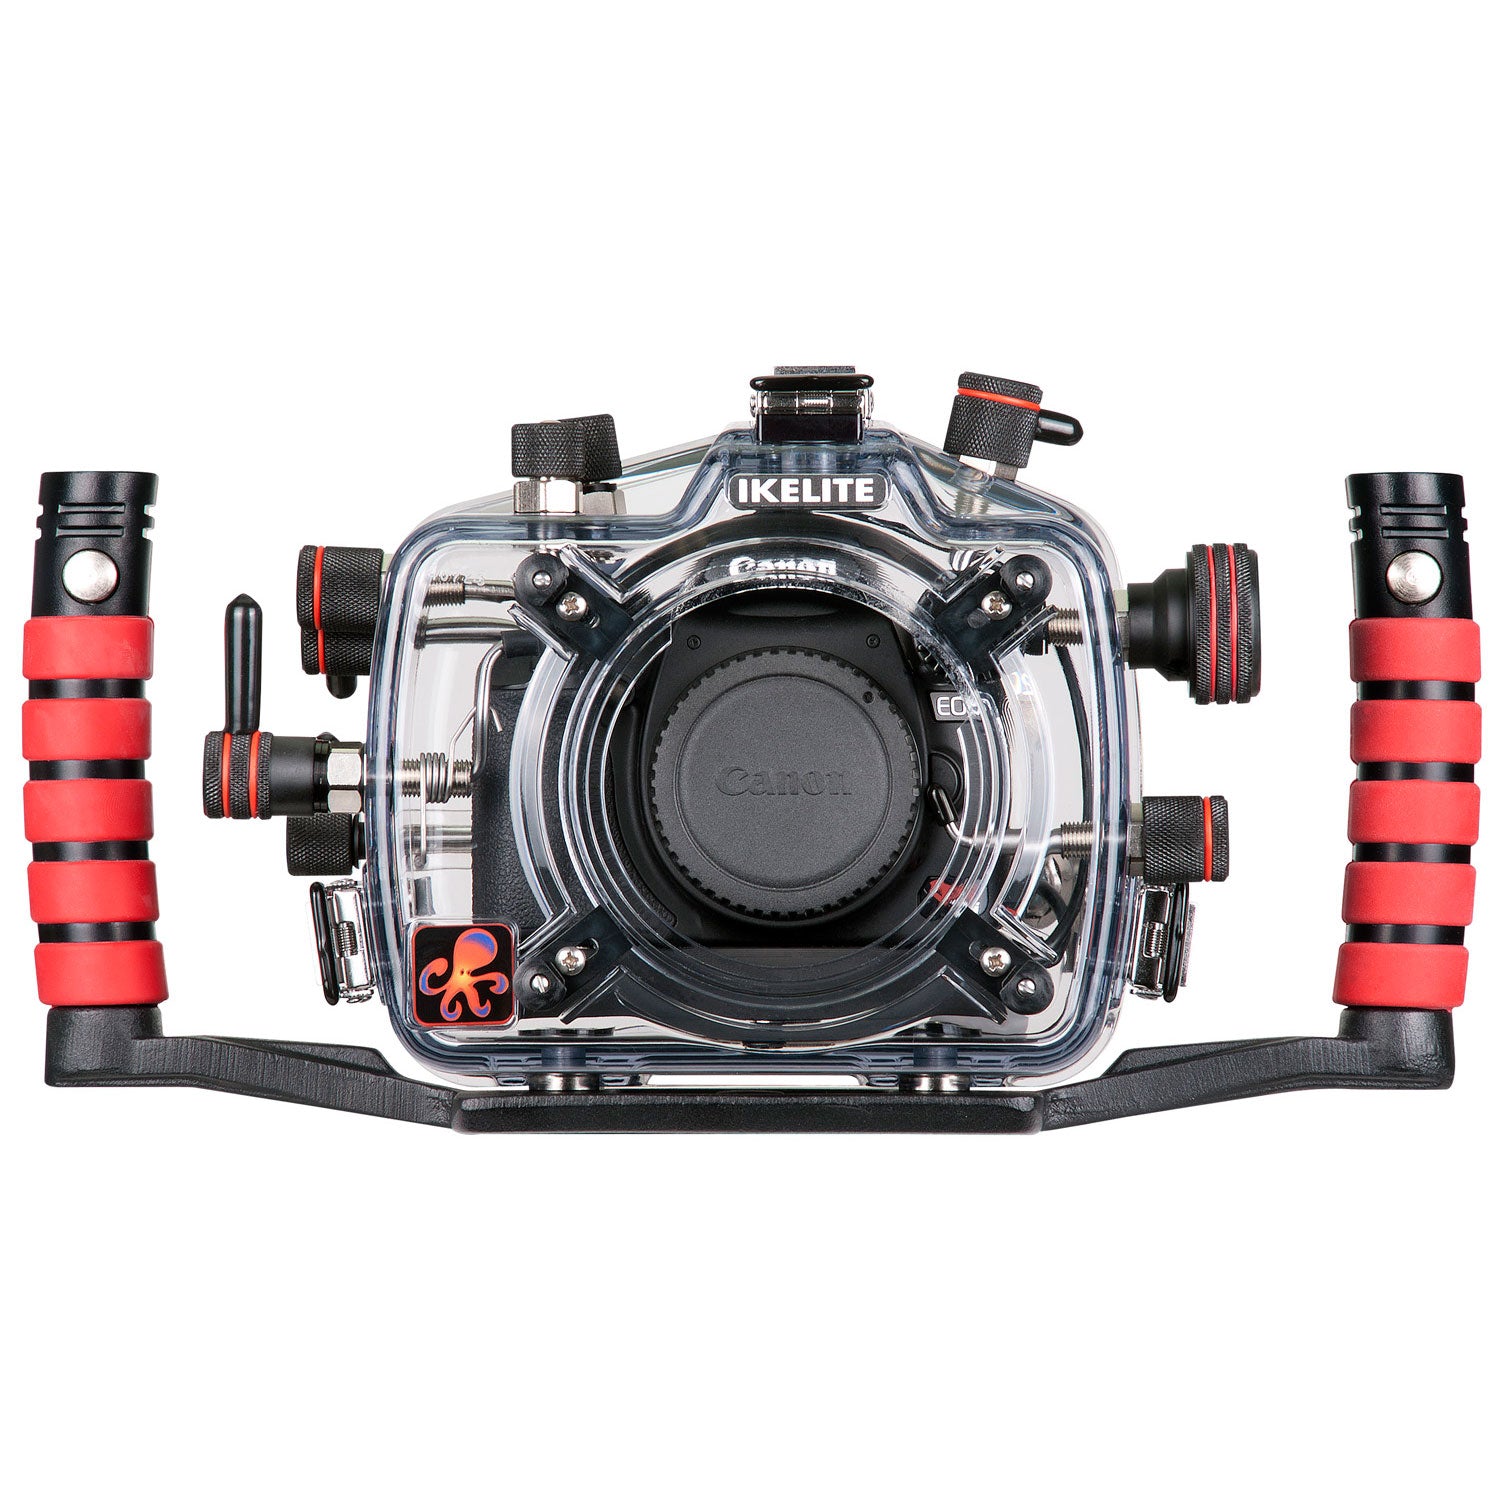 200FL Underwater TTL Housing for Canon EOS 450D Rebel XSi (Kiss X2), C